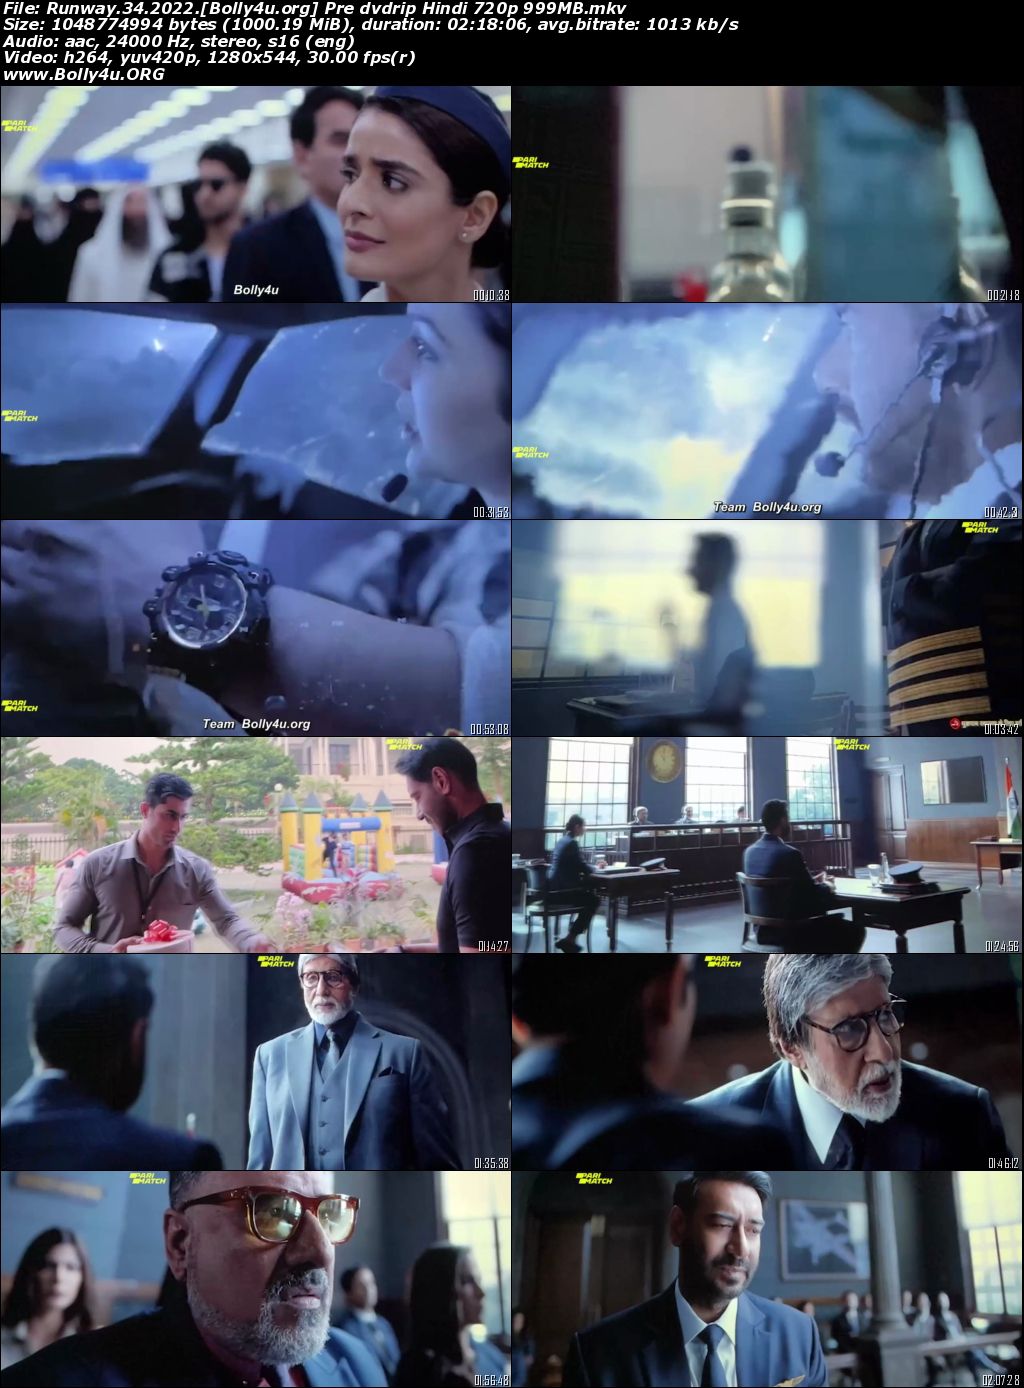 Runway 34 2022 Pre DVDRip Hindi Movie Download 720p 480p